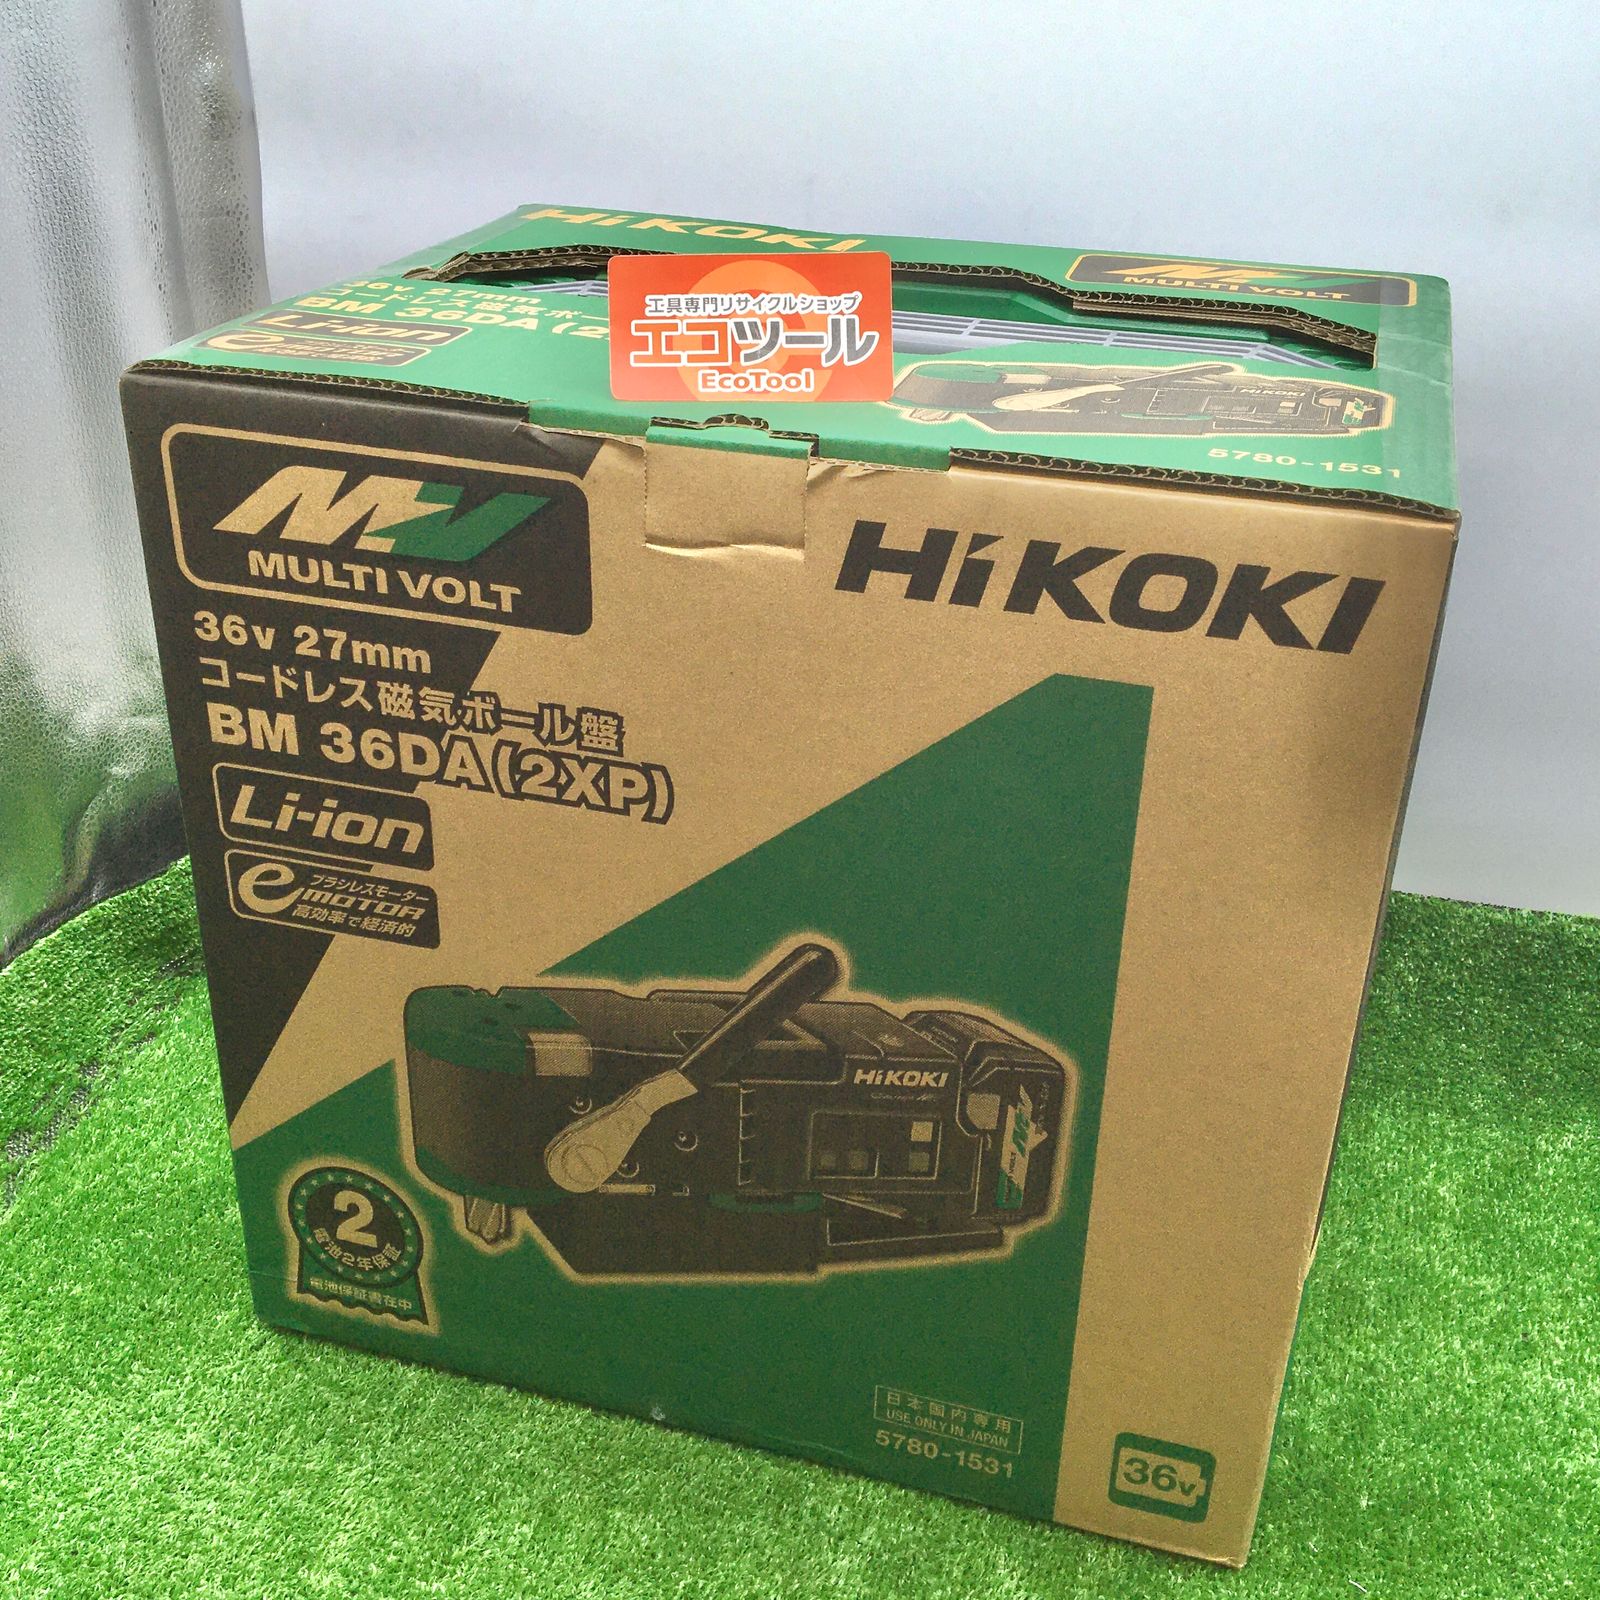 HIKOKI マルチボルト コードレス磁気ボール盤 BM36DA(2XP) - 14